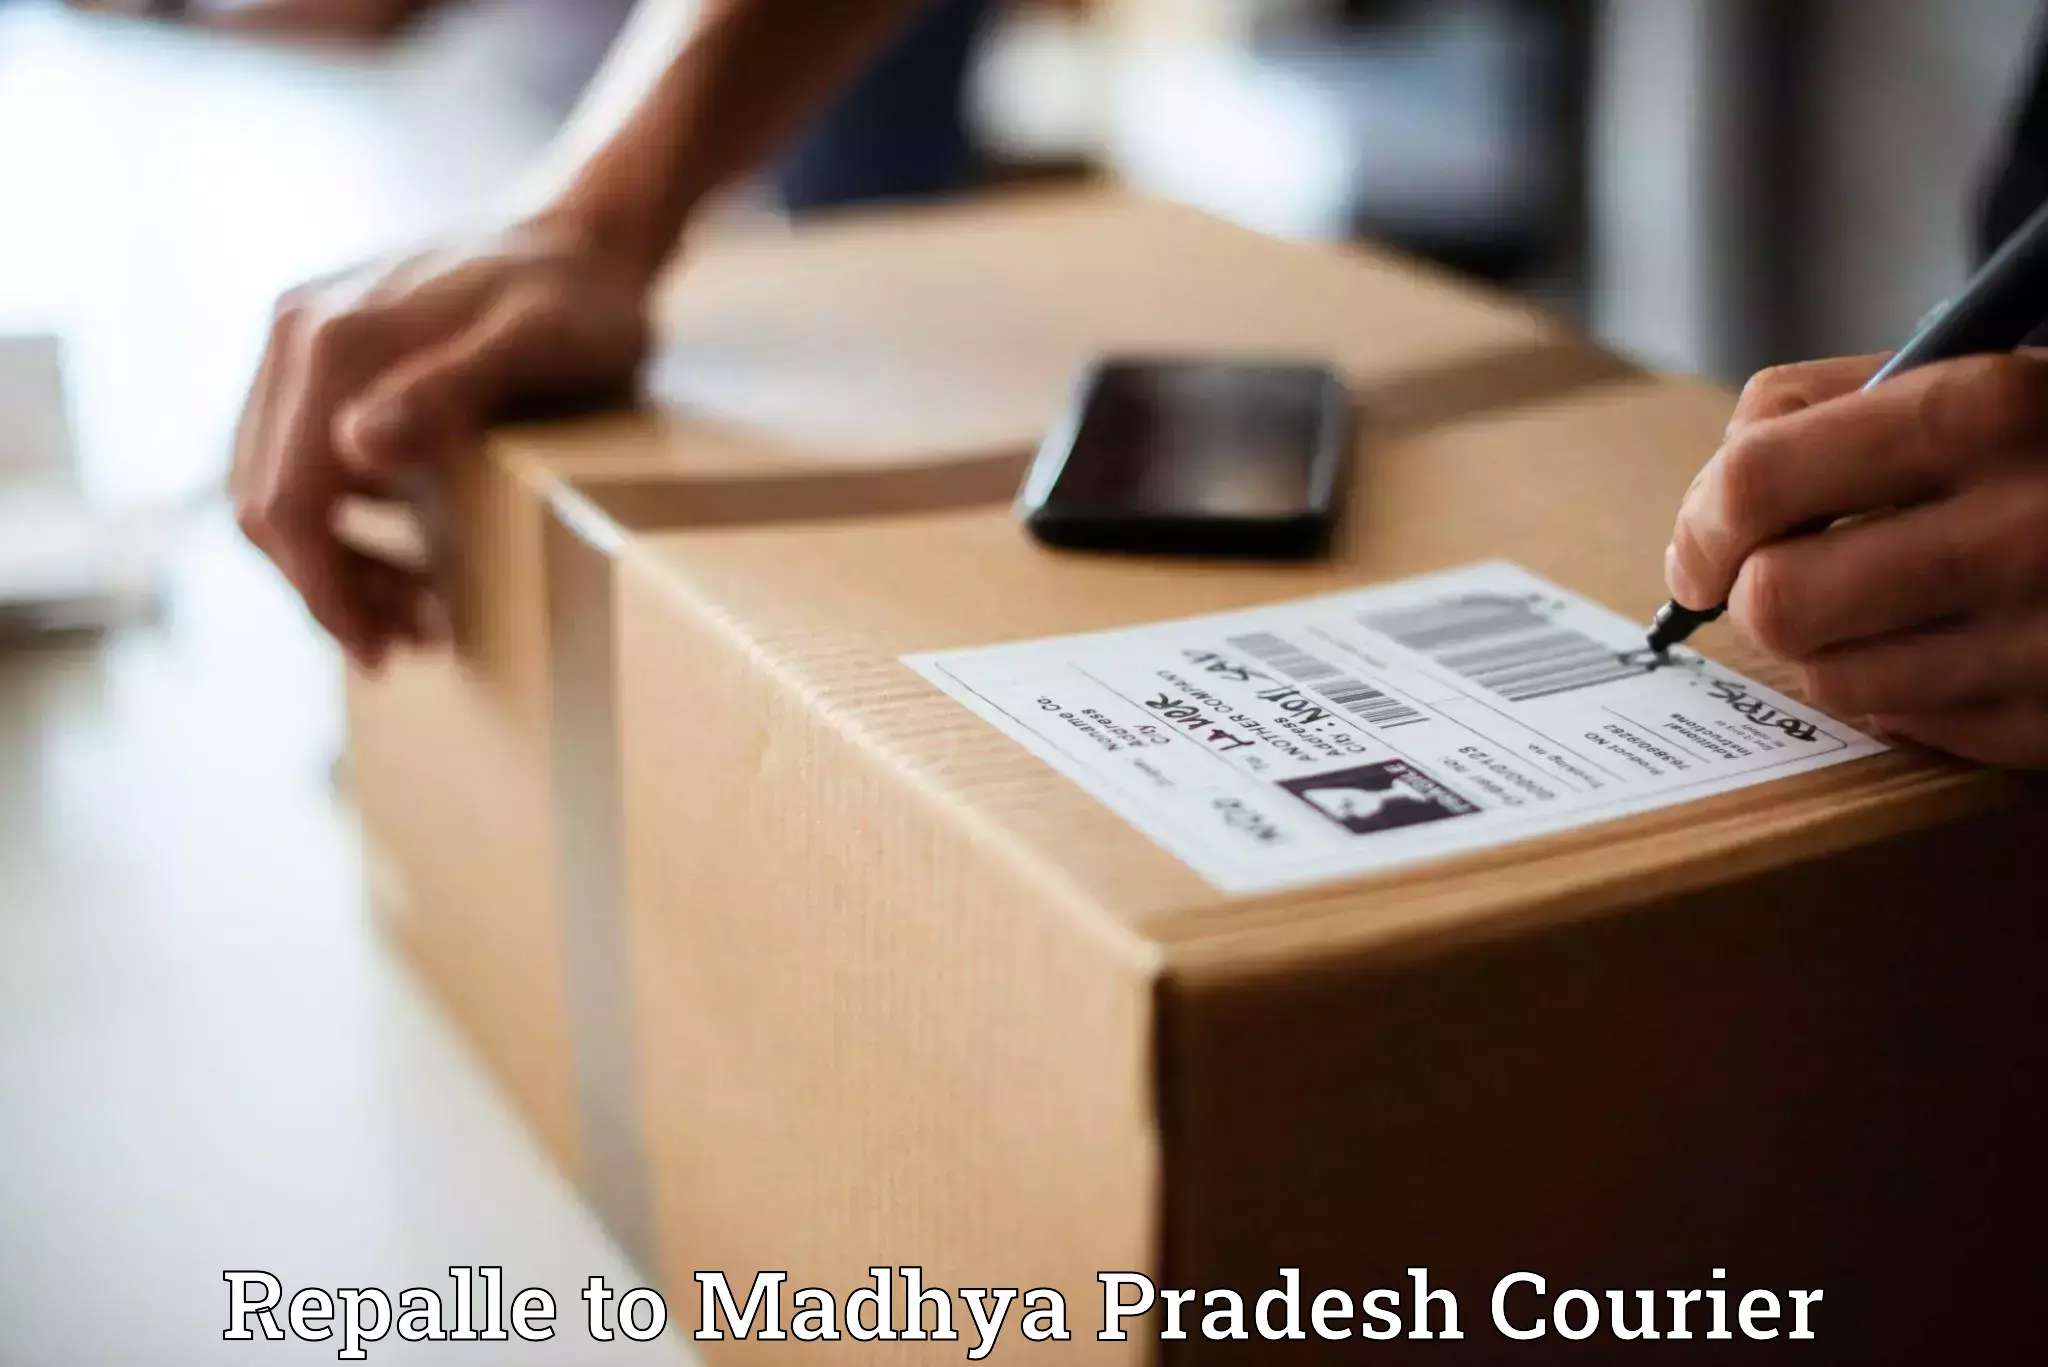 Modern delivery methods Repalle to Madhya Pradesh